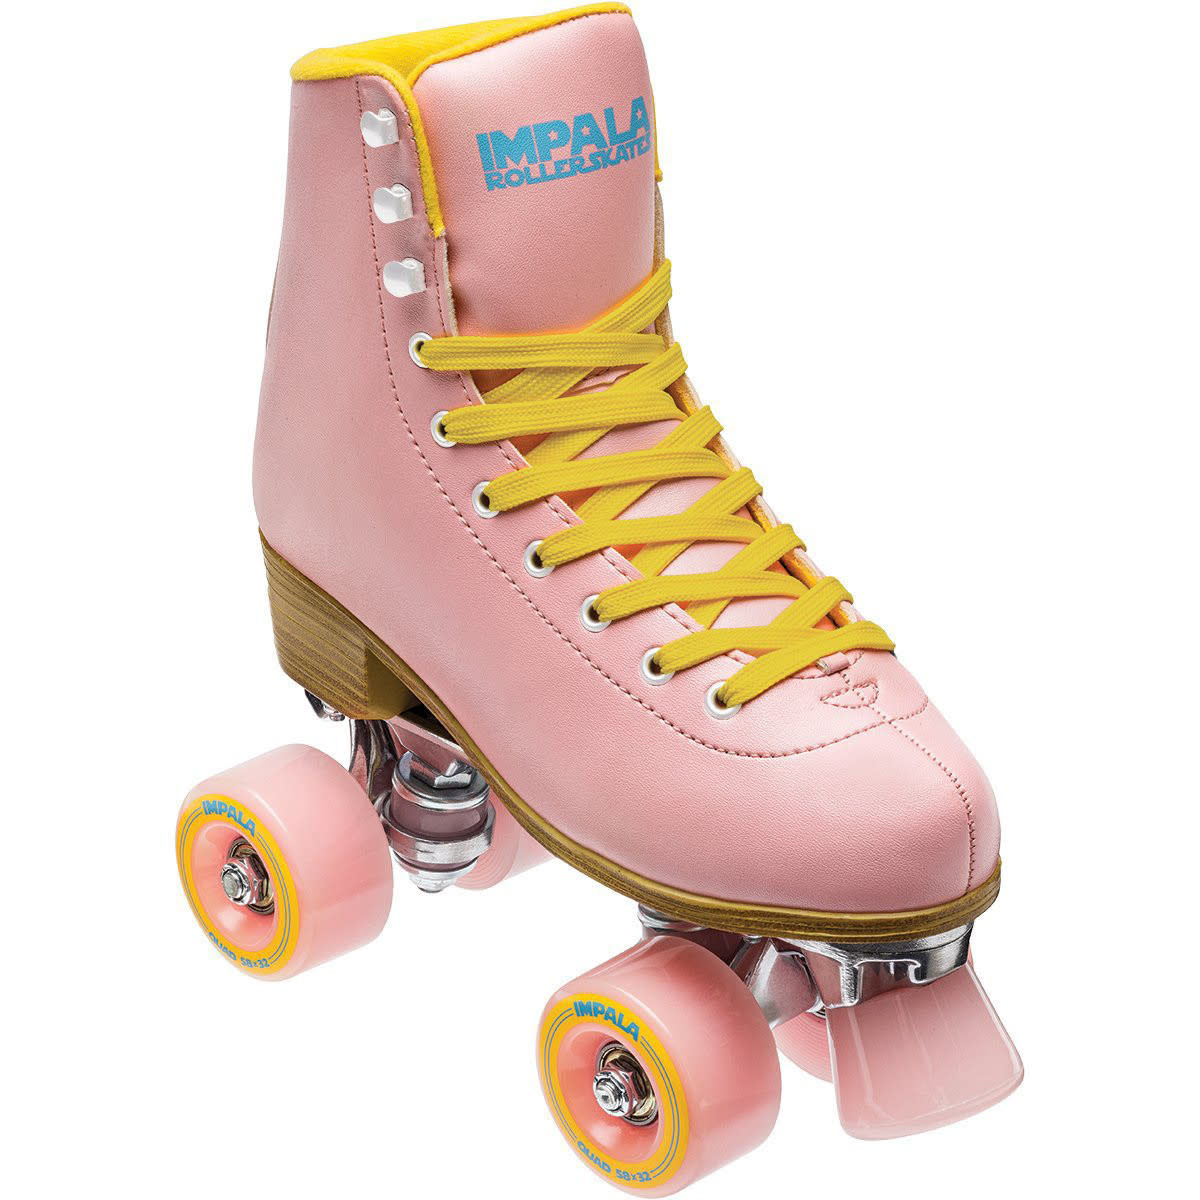 Impala Sidewalk Womens Roller Skates Pink/Yellow 9